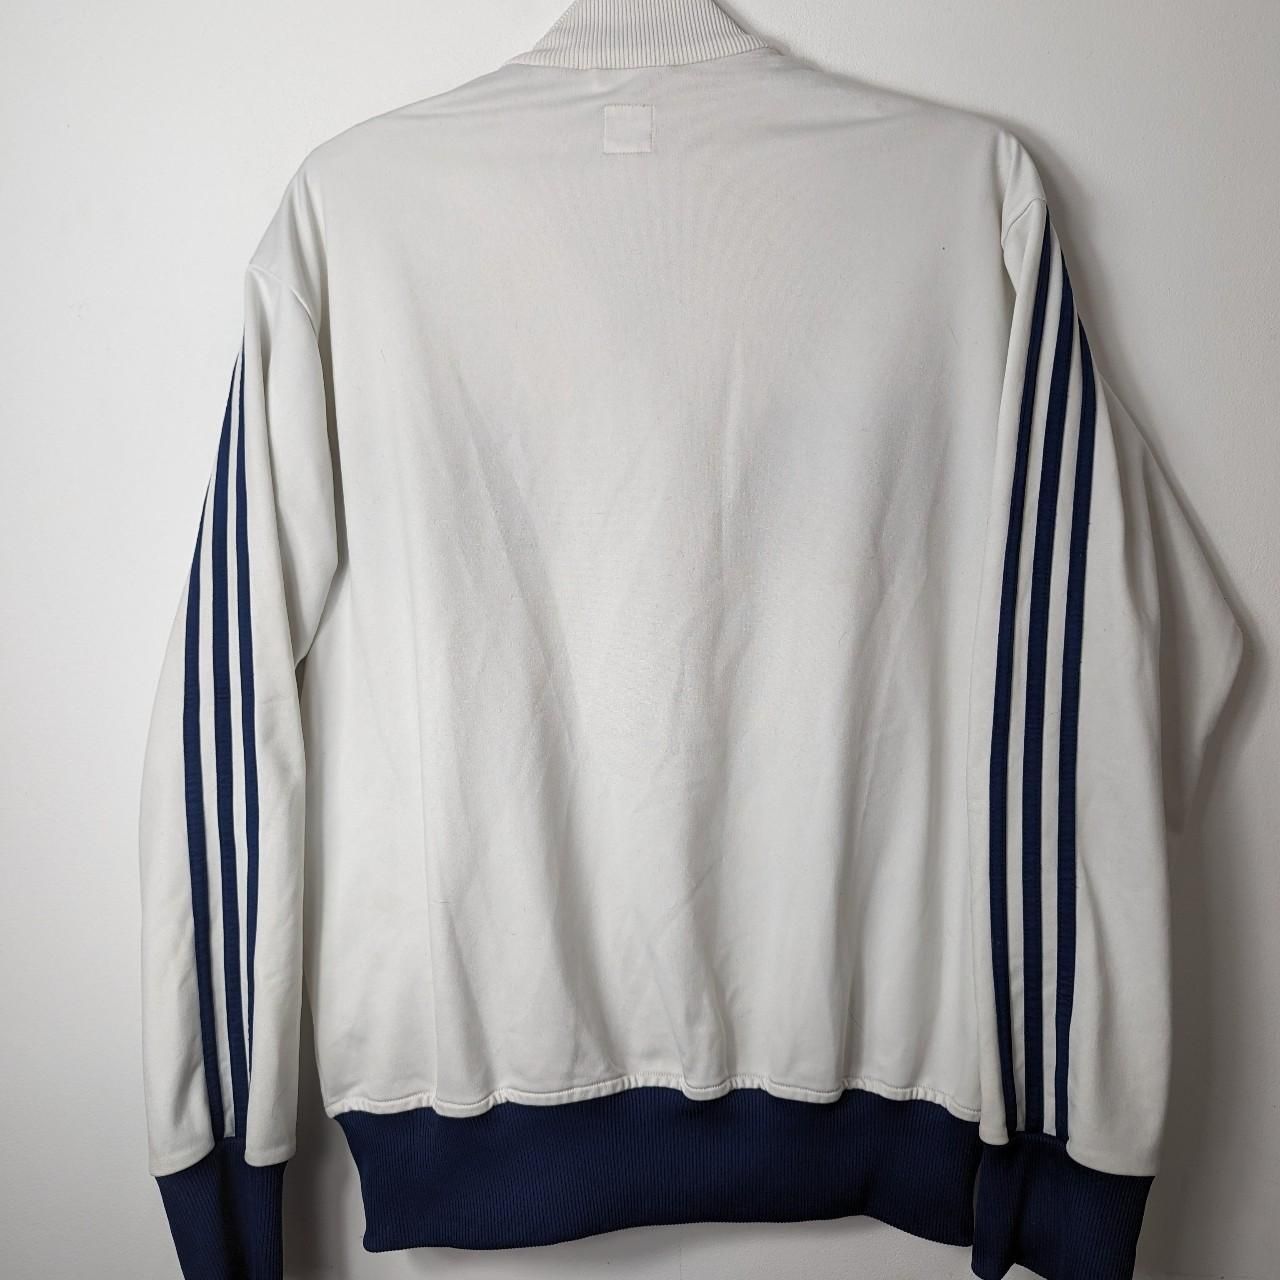 Adidas Vintage Adidas y2k Track top Track suit Sweatshirt Size US M / EU 48-50 / 2 - 4 Thumbnail